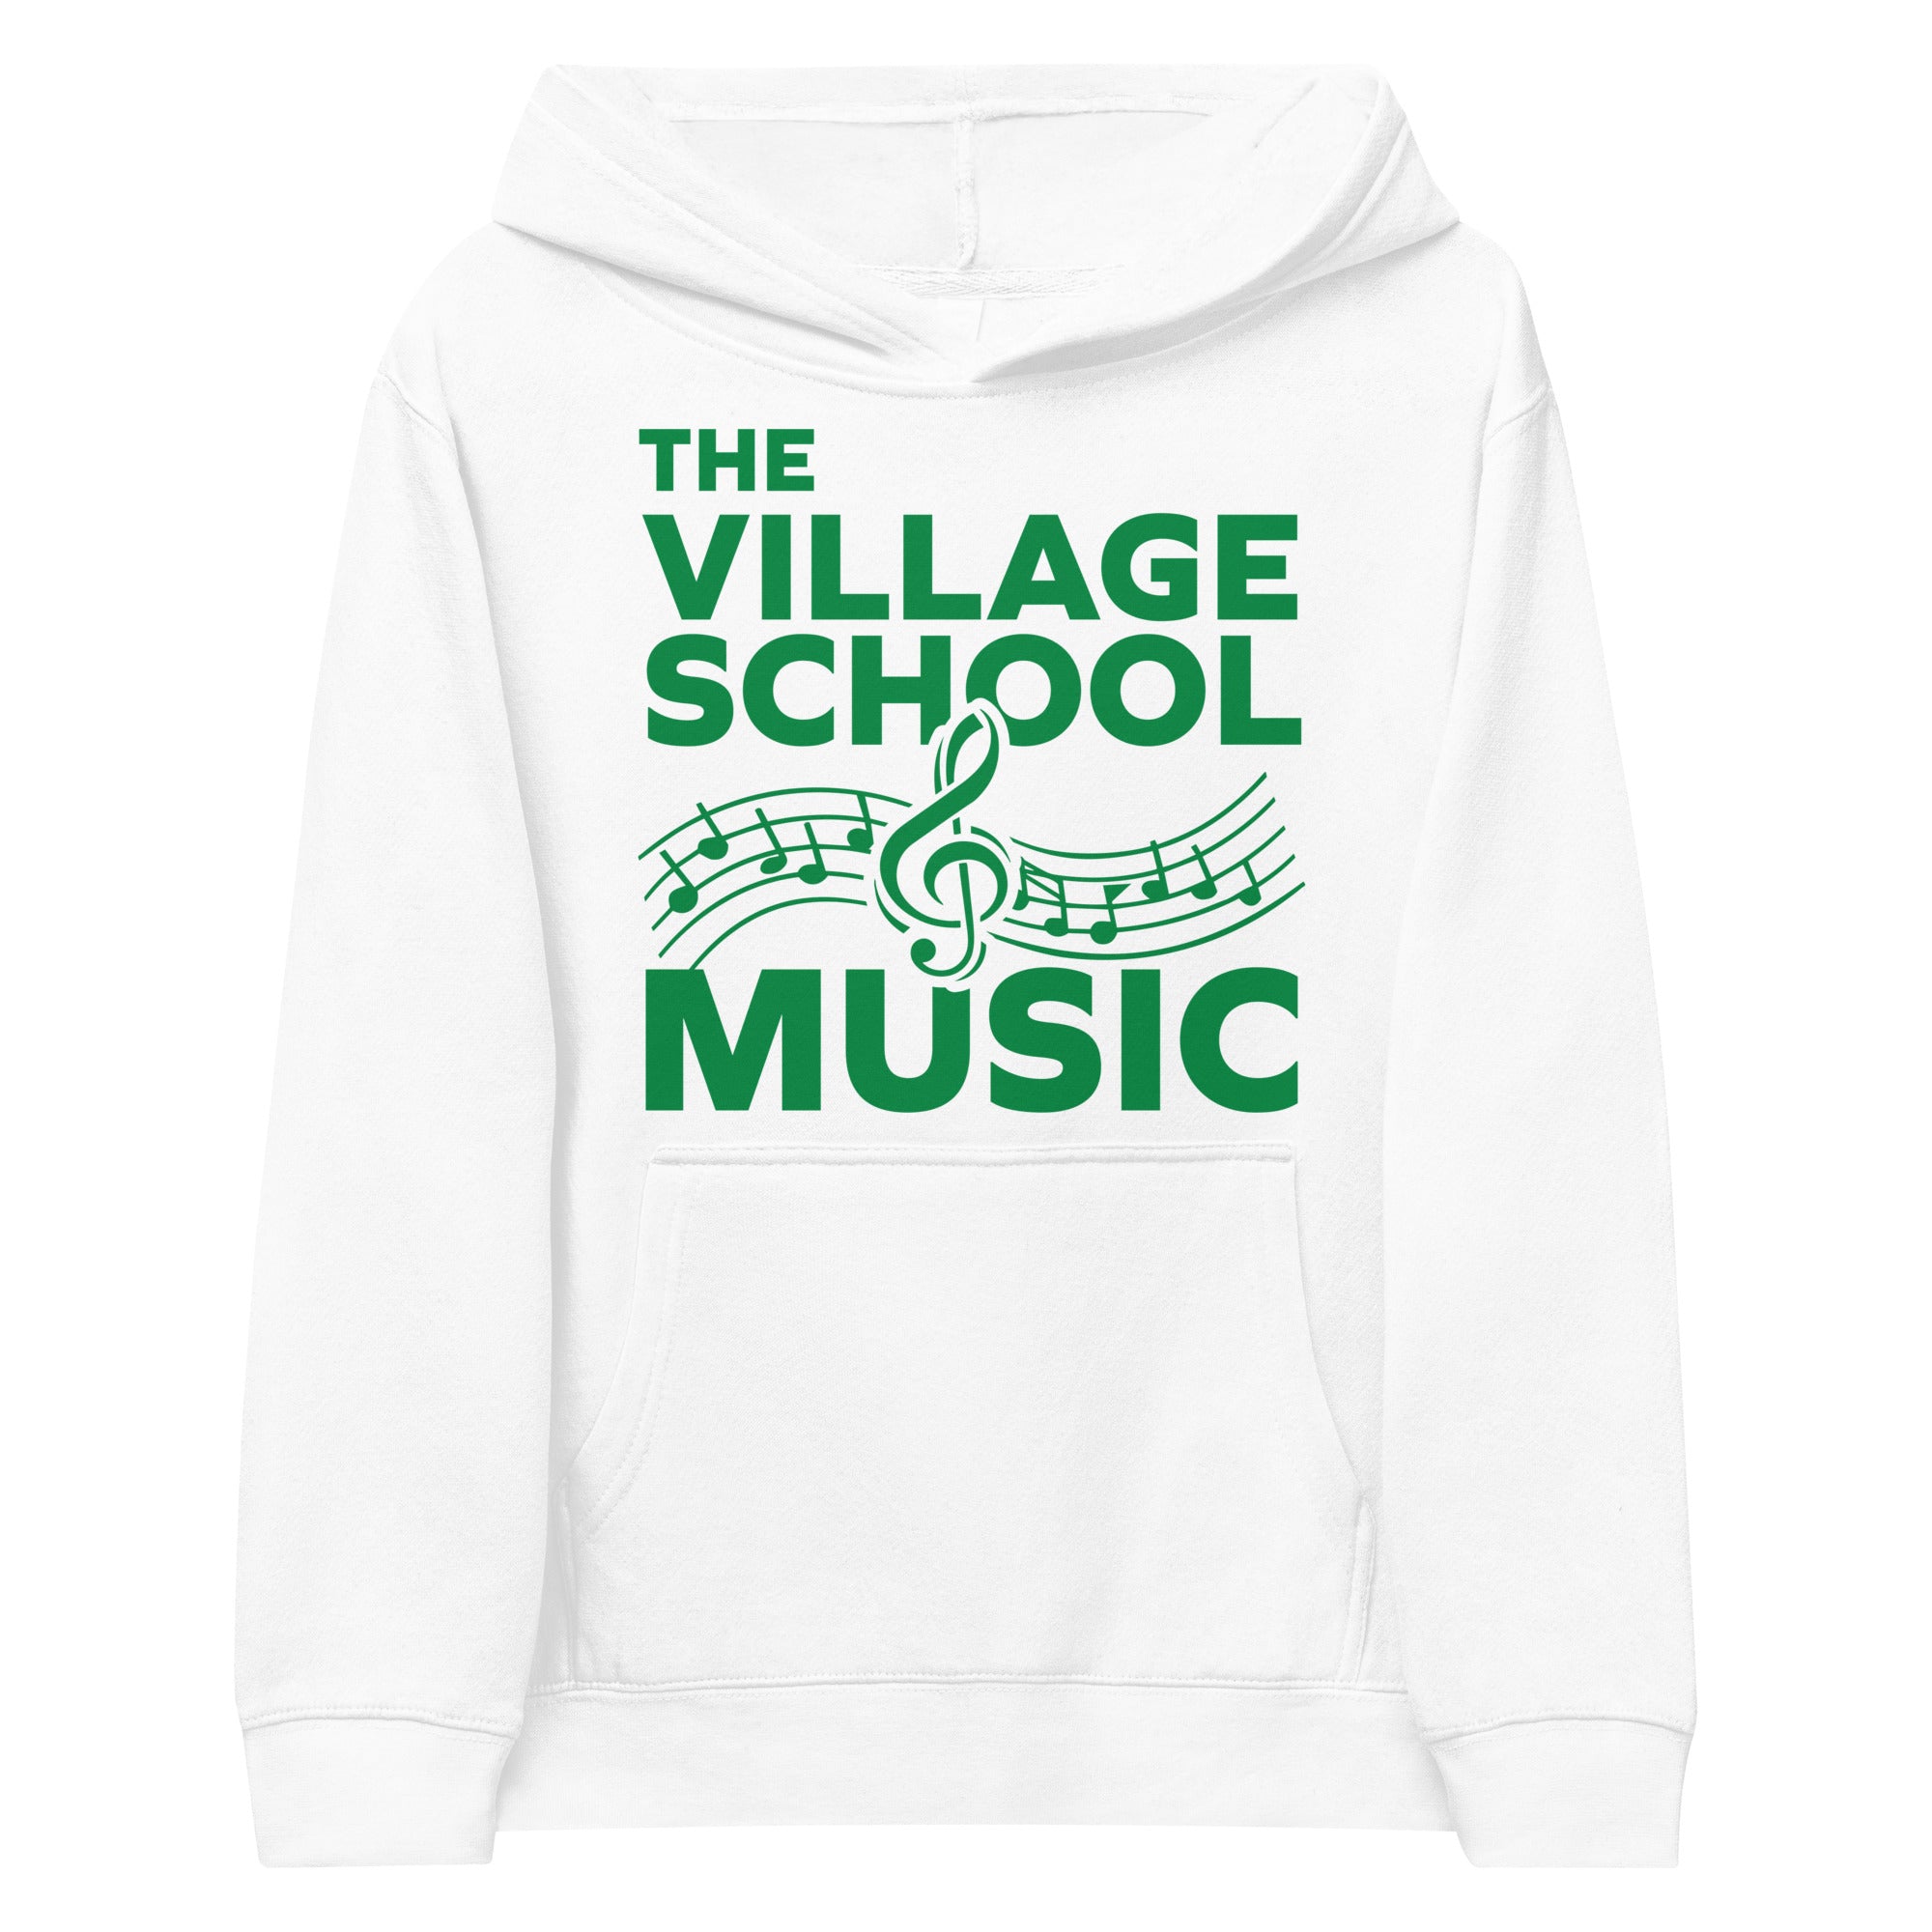 The Village School Music Kids Fleece Hoodie